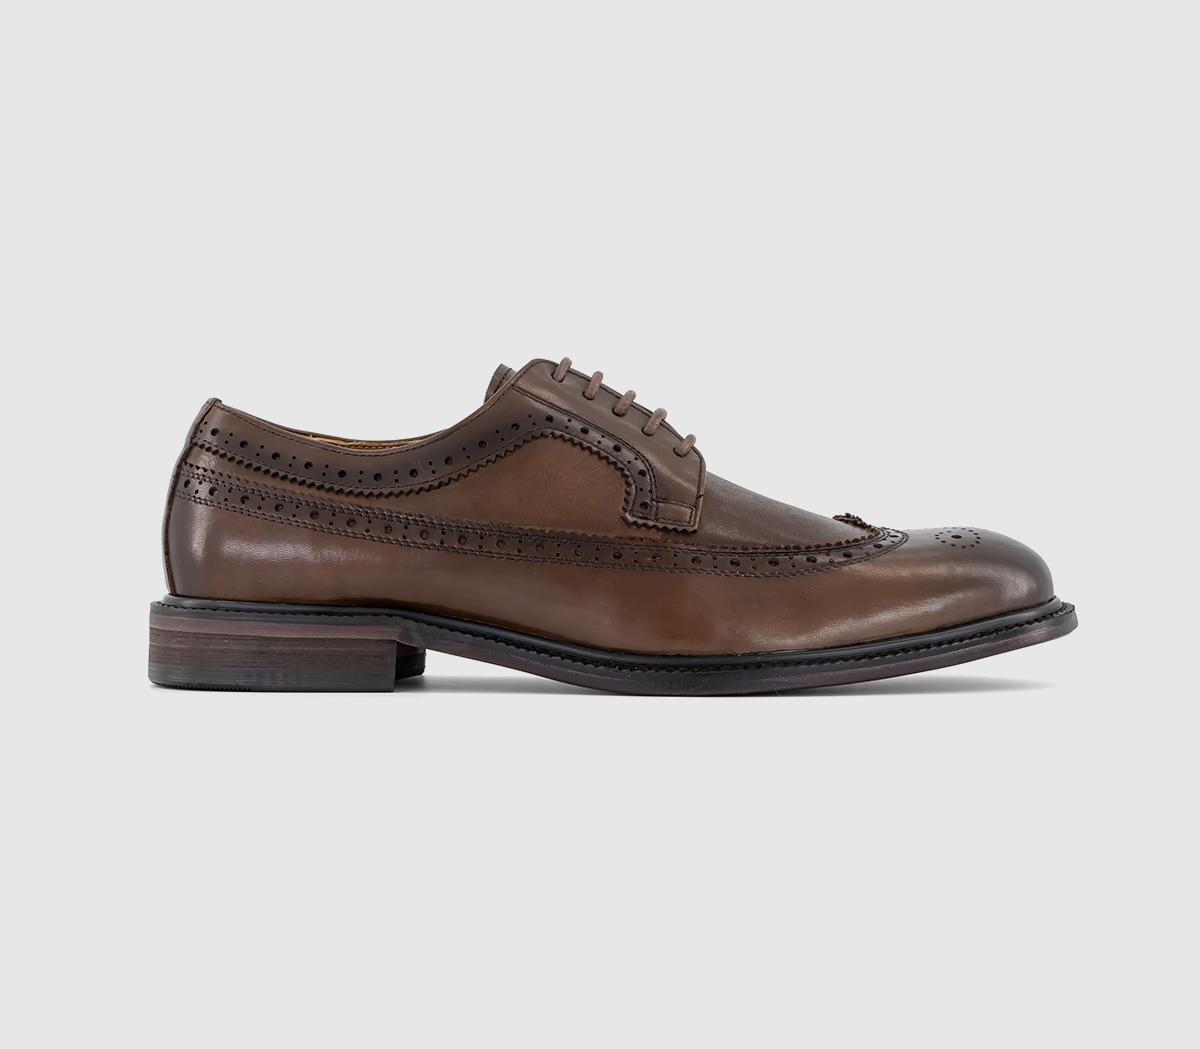 OFFICE Mackay Longwing Brogues Dark Tan Leather - Men’s Smart Shoes